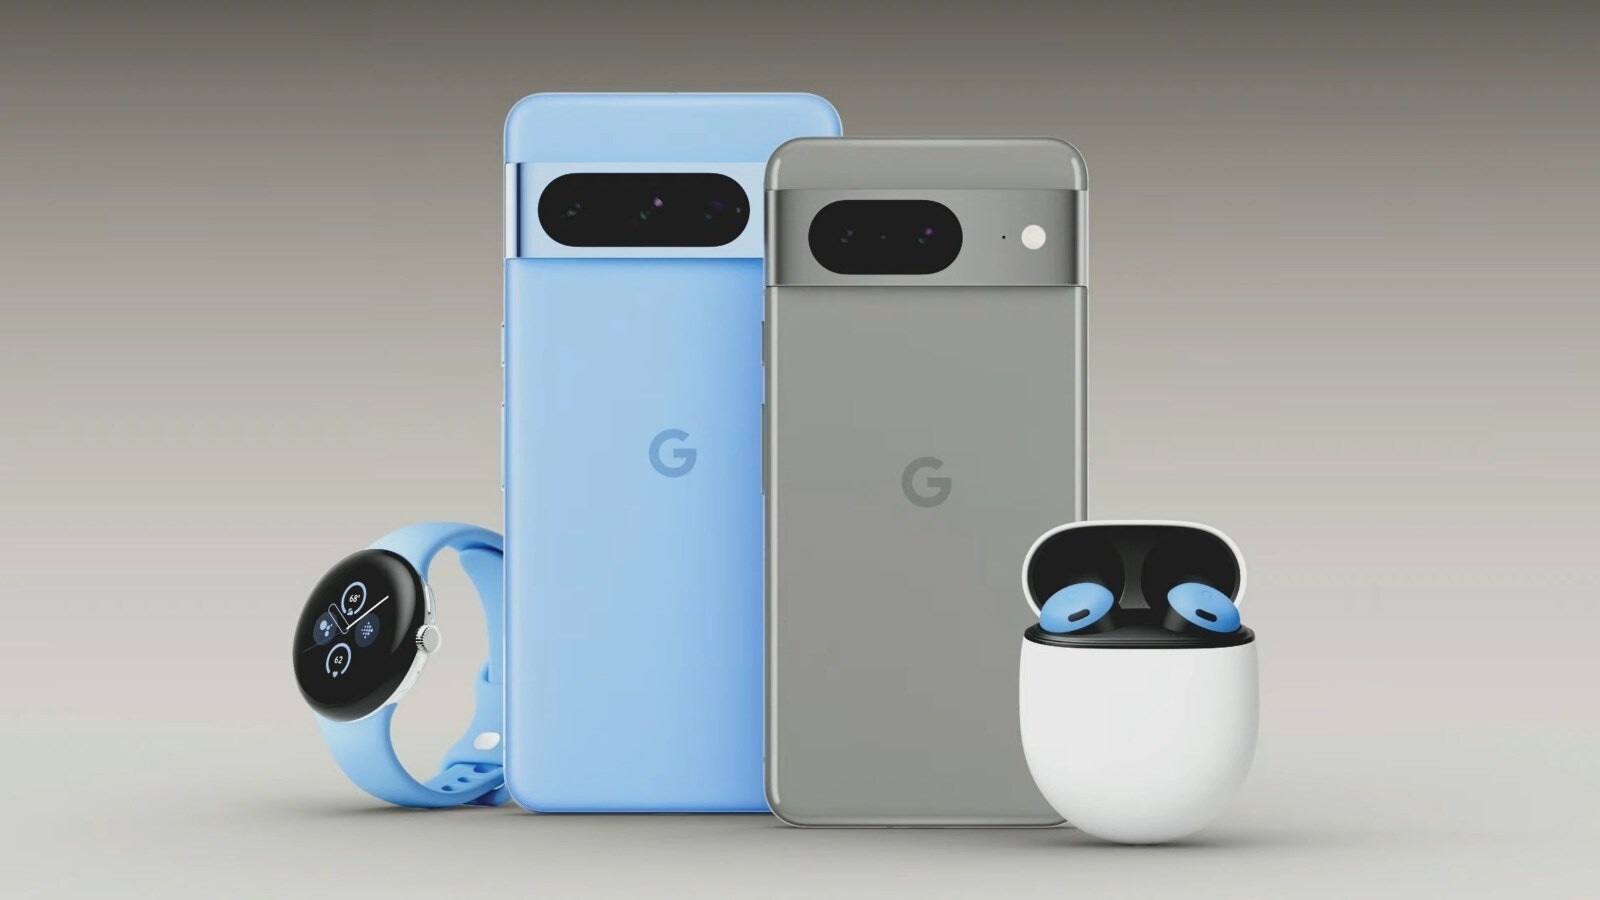 Google Pixel 6a specs: Tensor chip, 12MP camera, more - 9to5Google